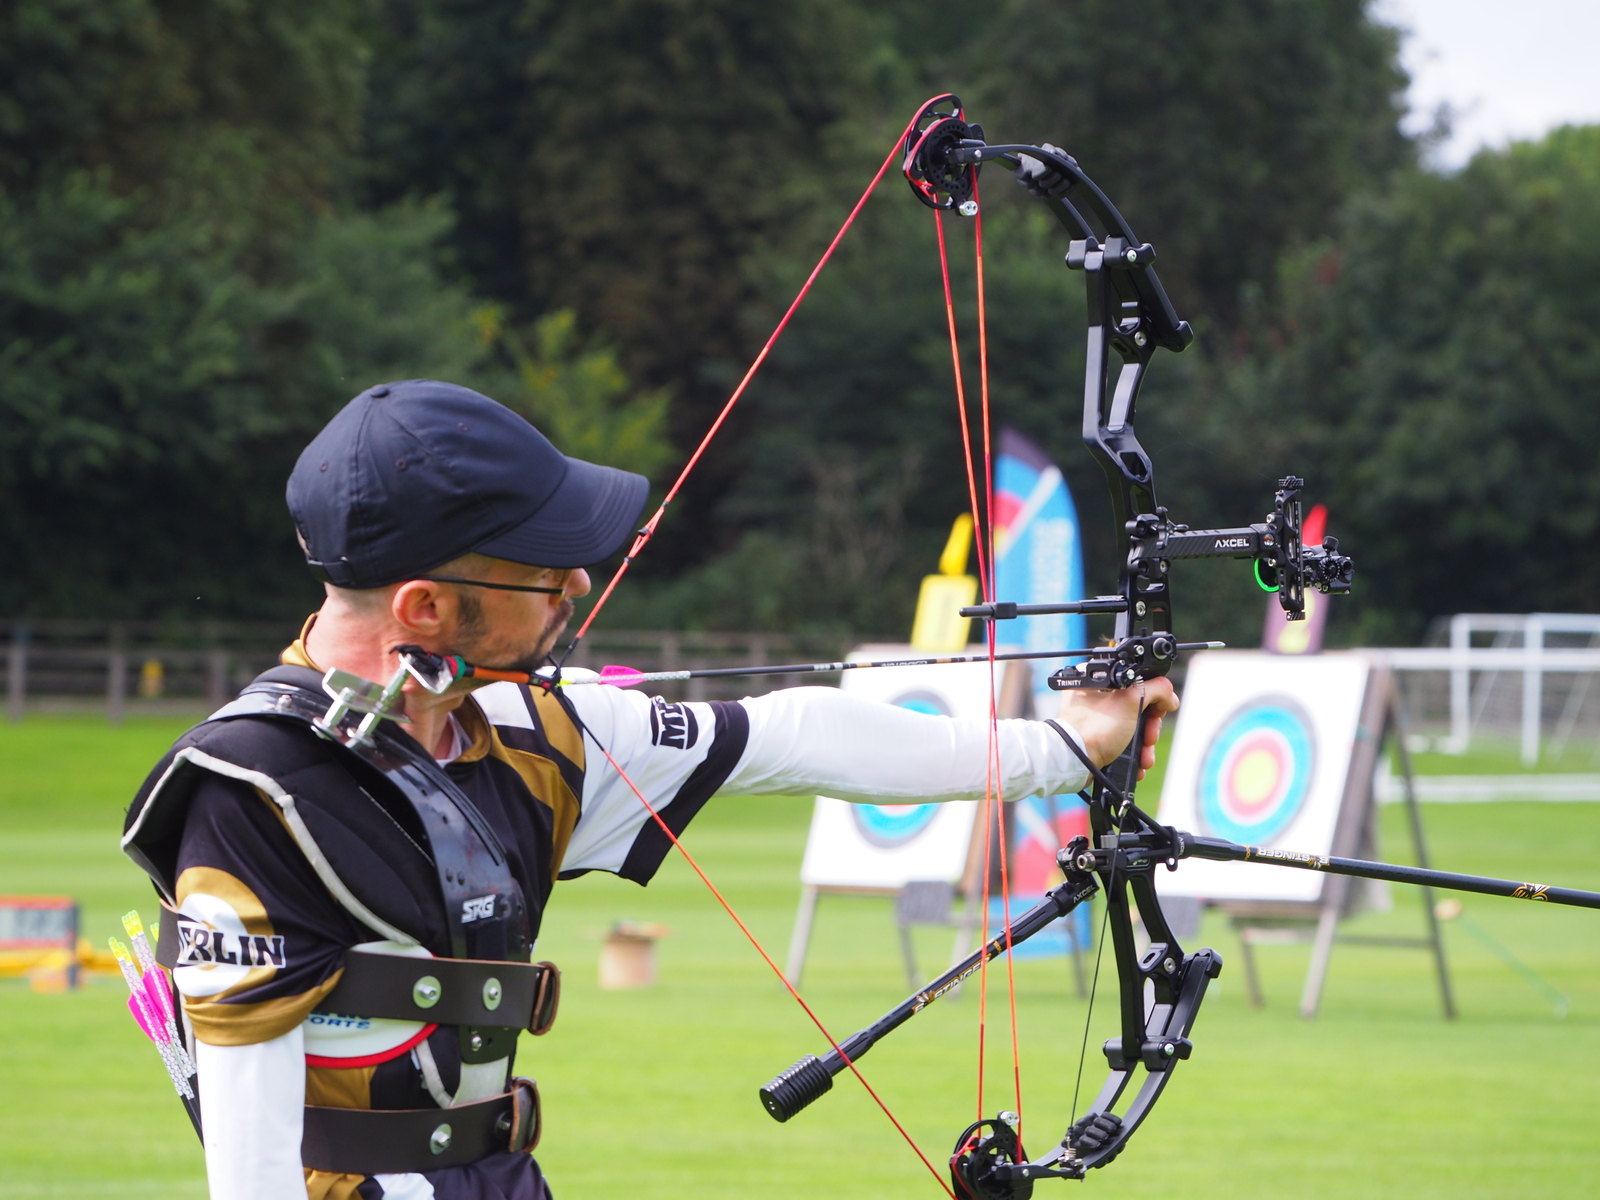 Archer using adaptive equipment to shoot